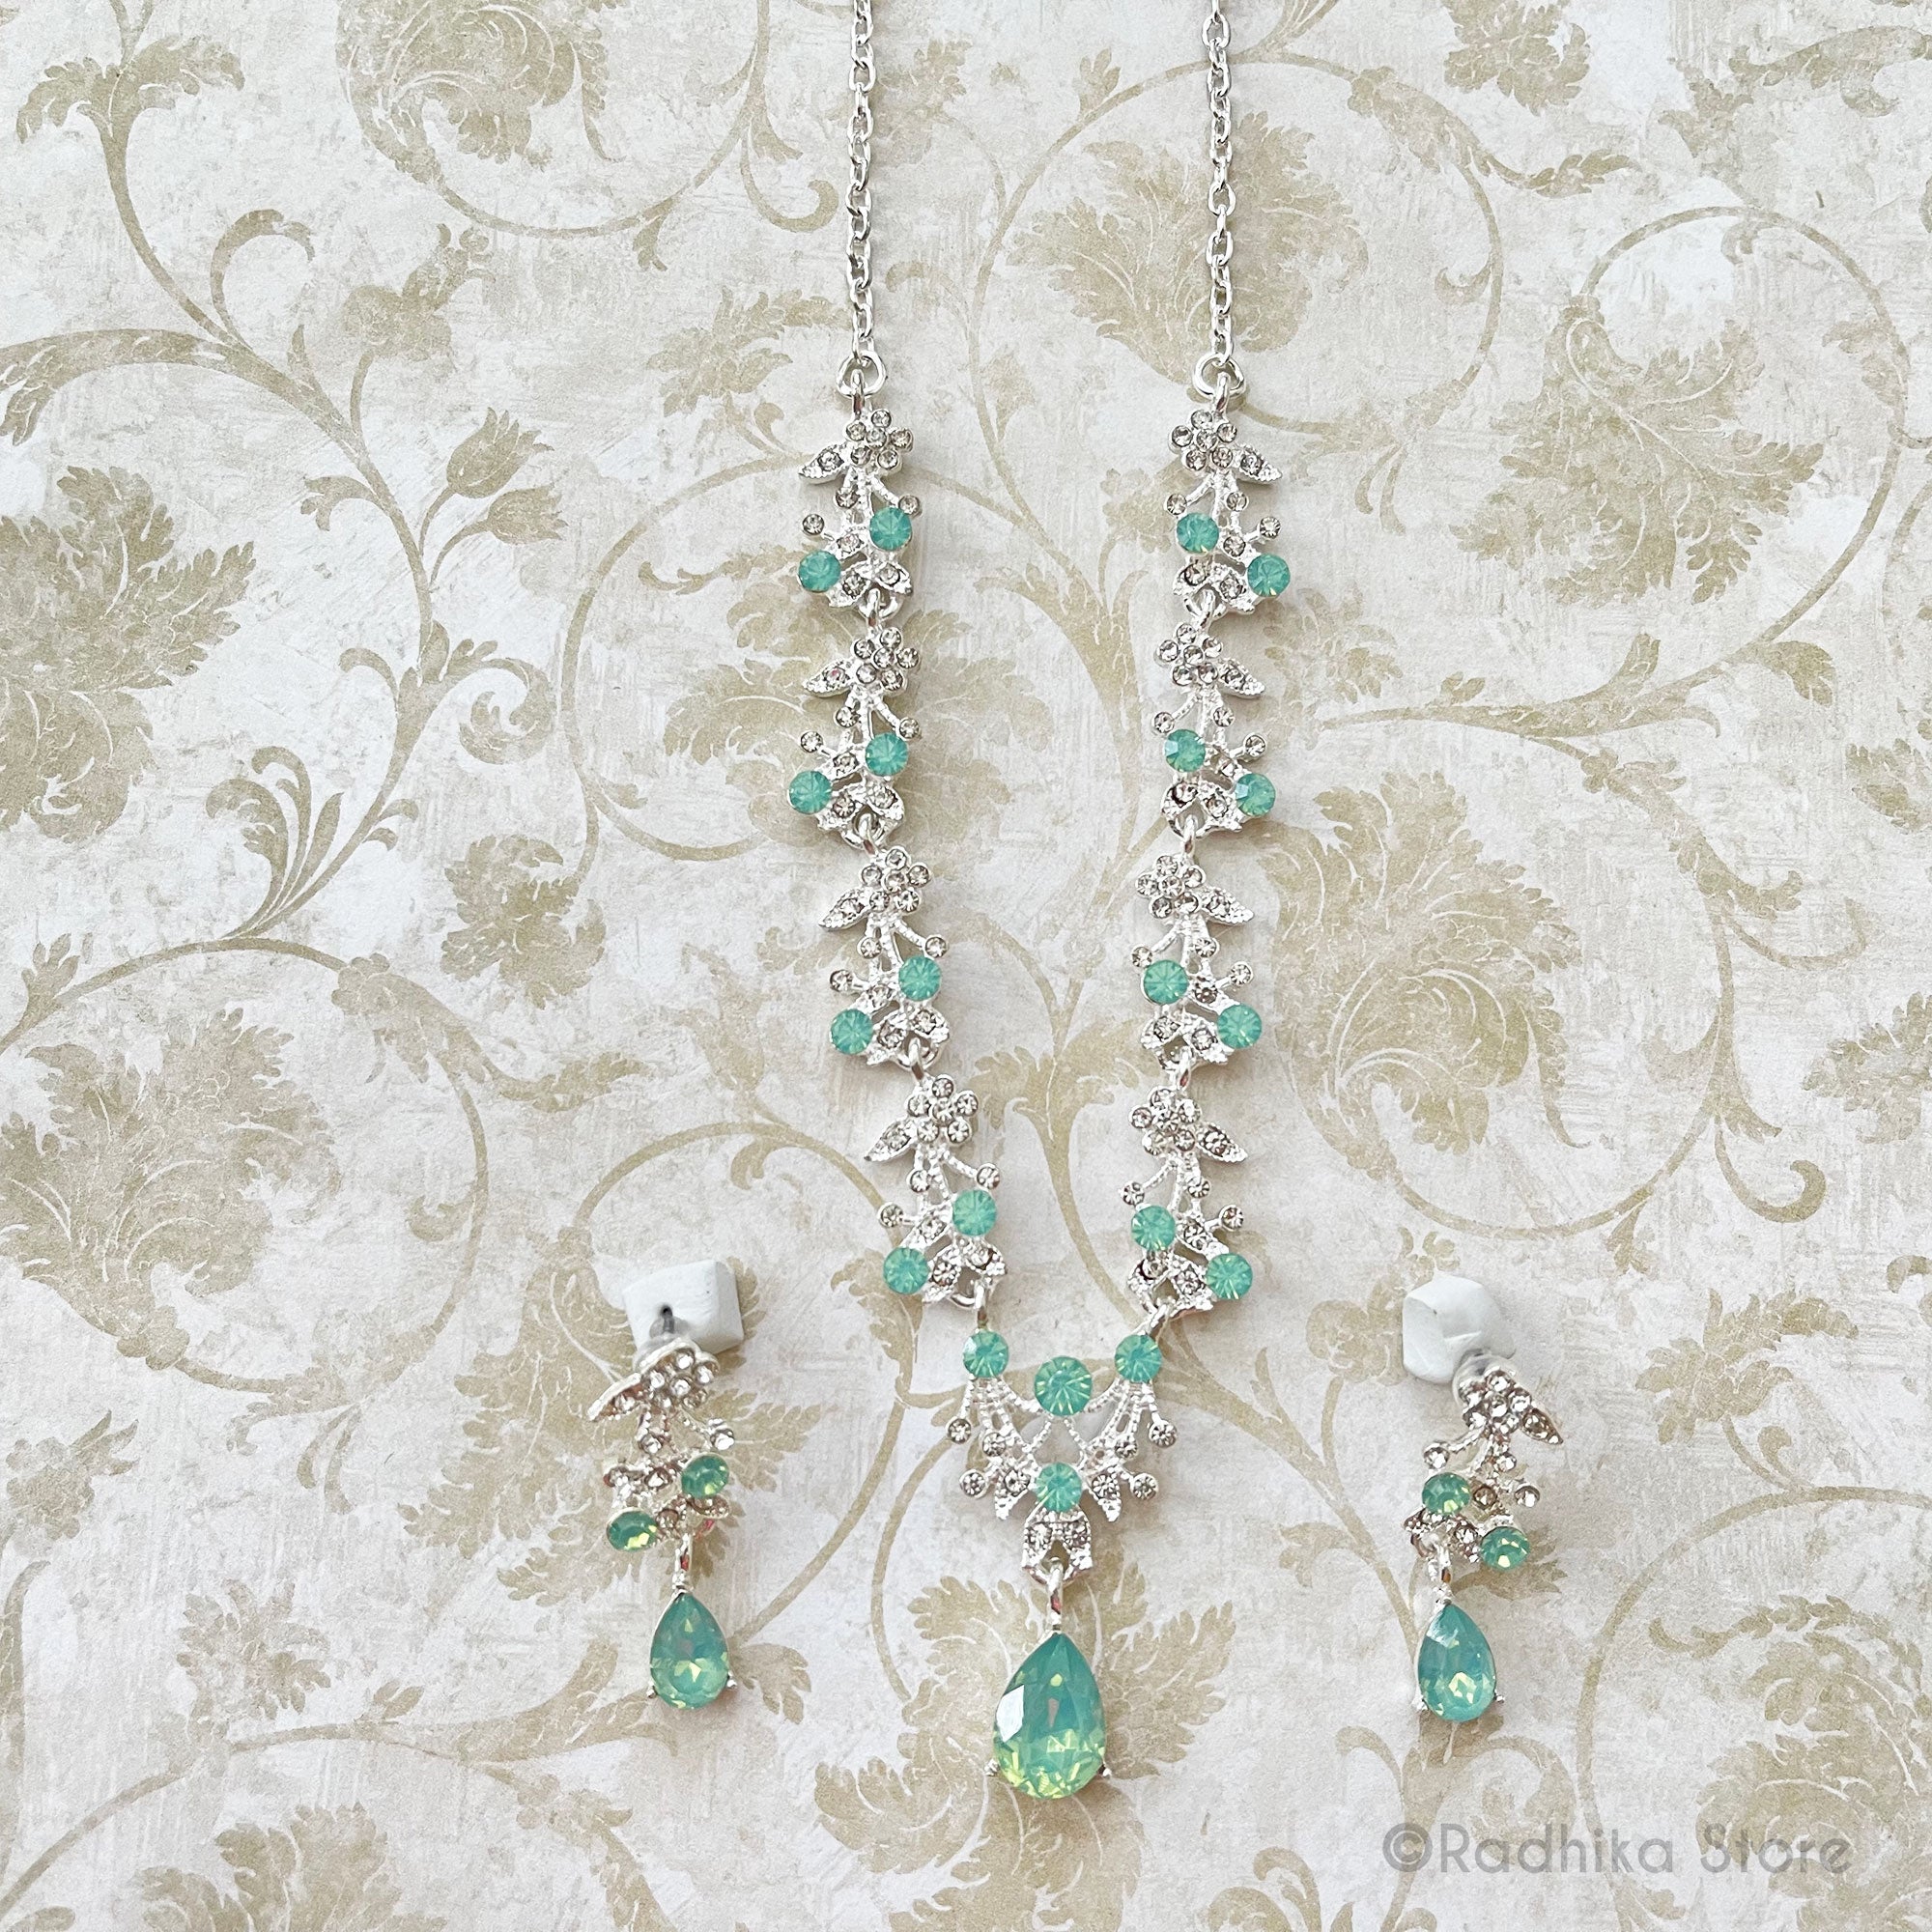 Vrindavan Dew Drops-Rhinestone Deity Necklace And Earring Set- Sea Green